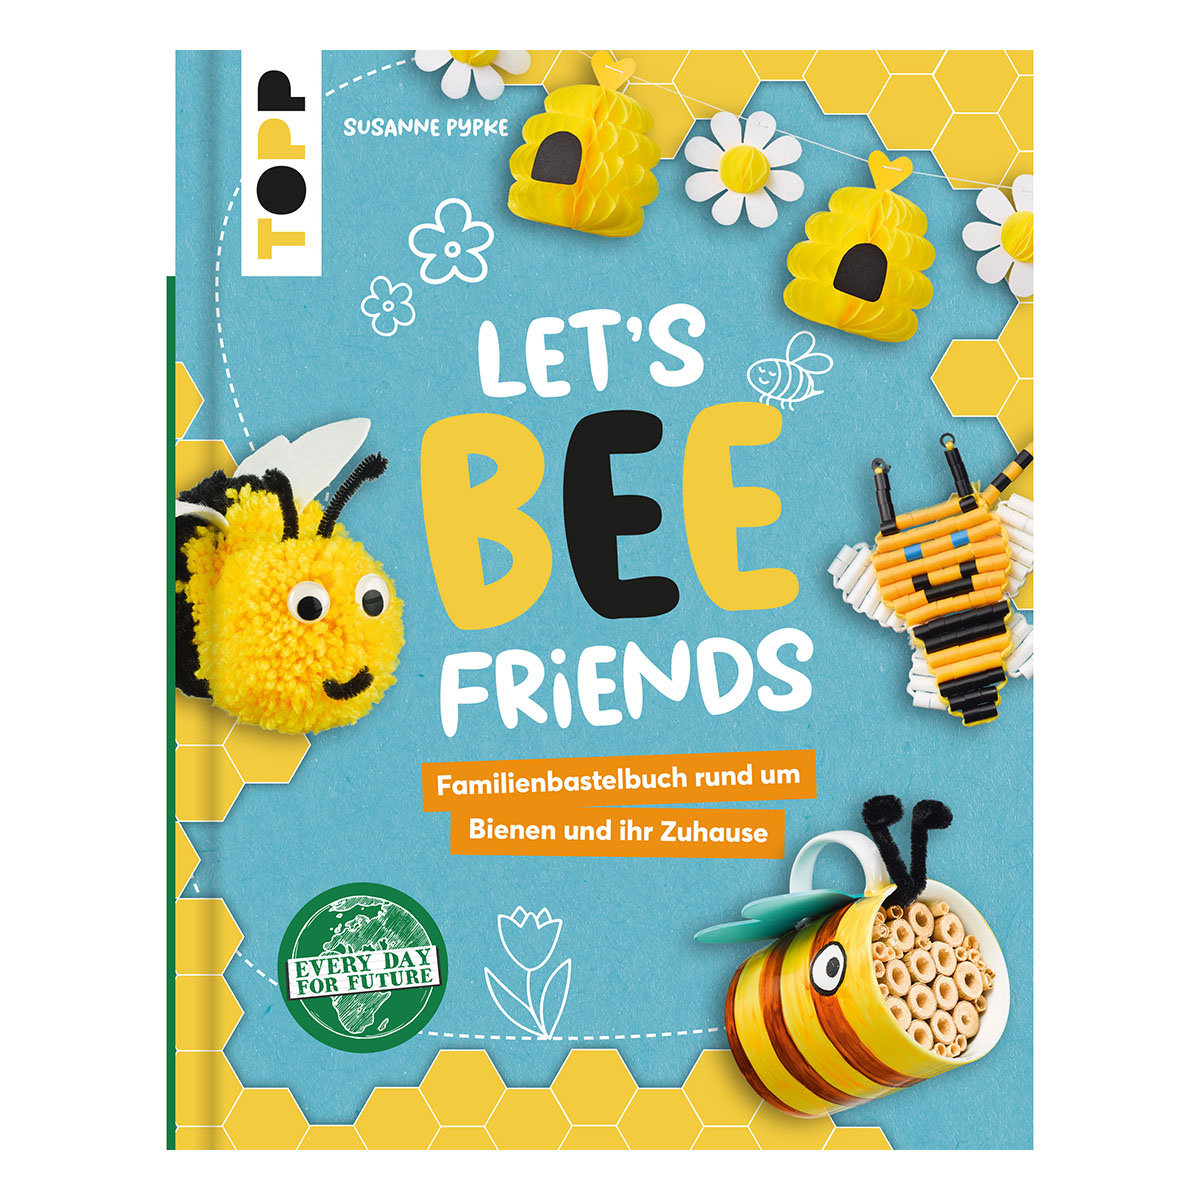 Let's Bee Friends
